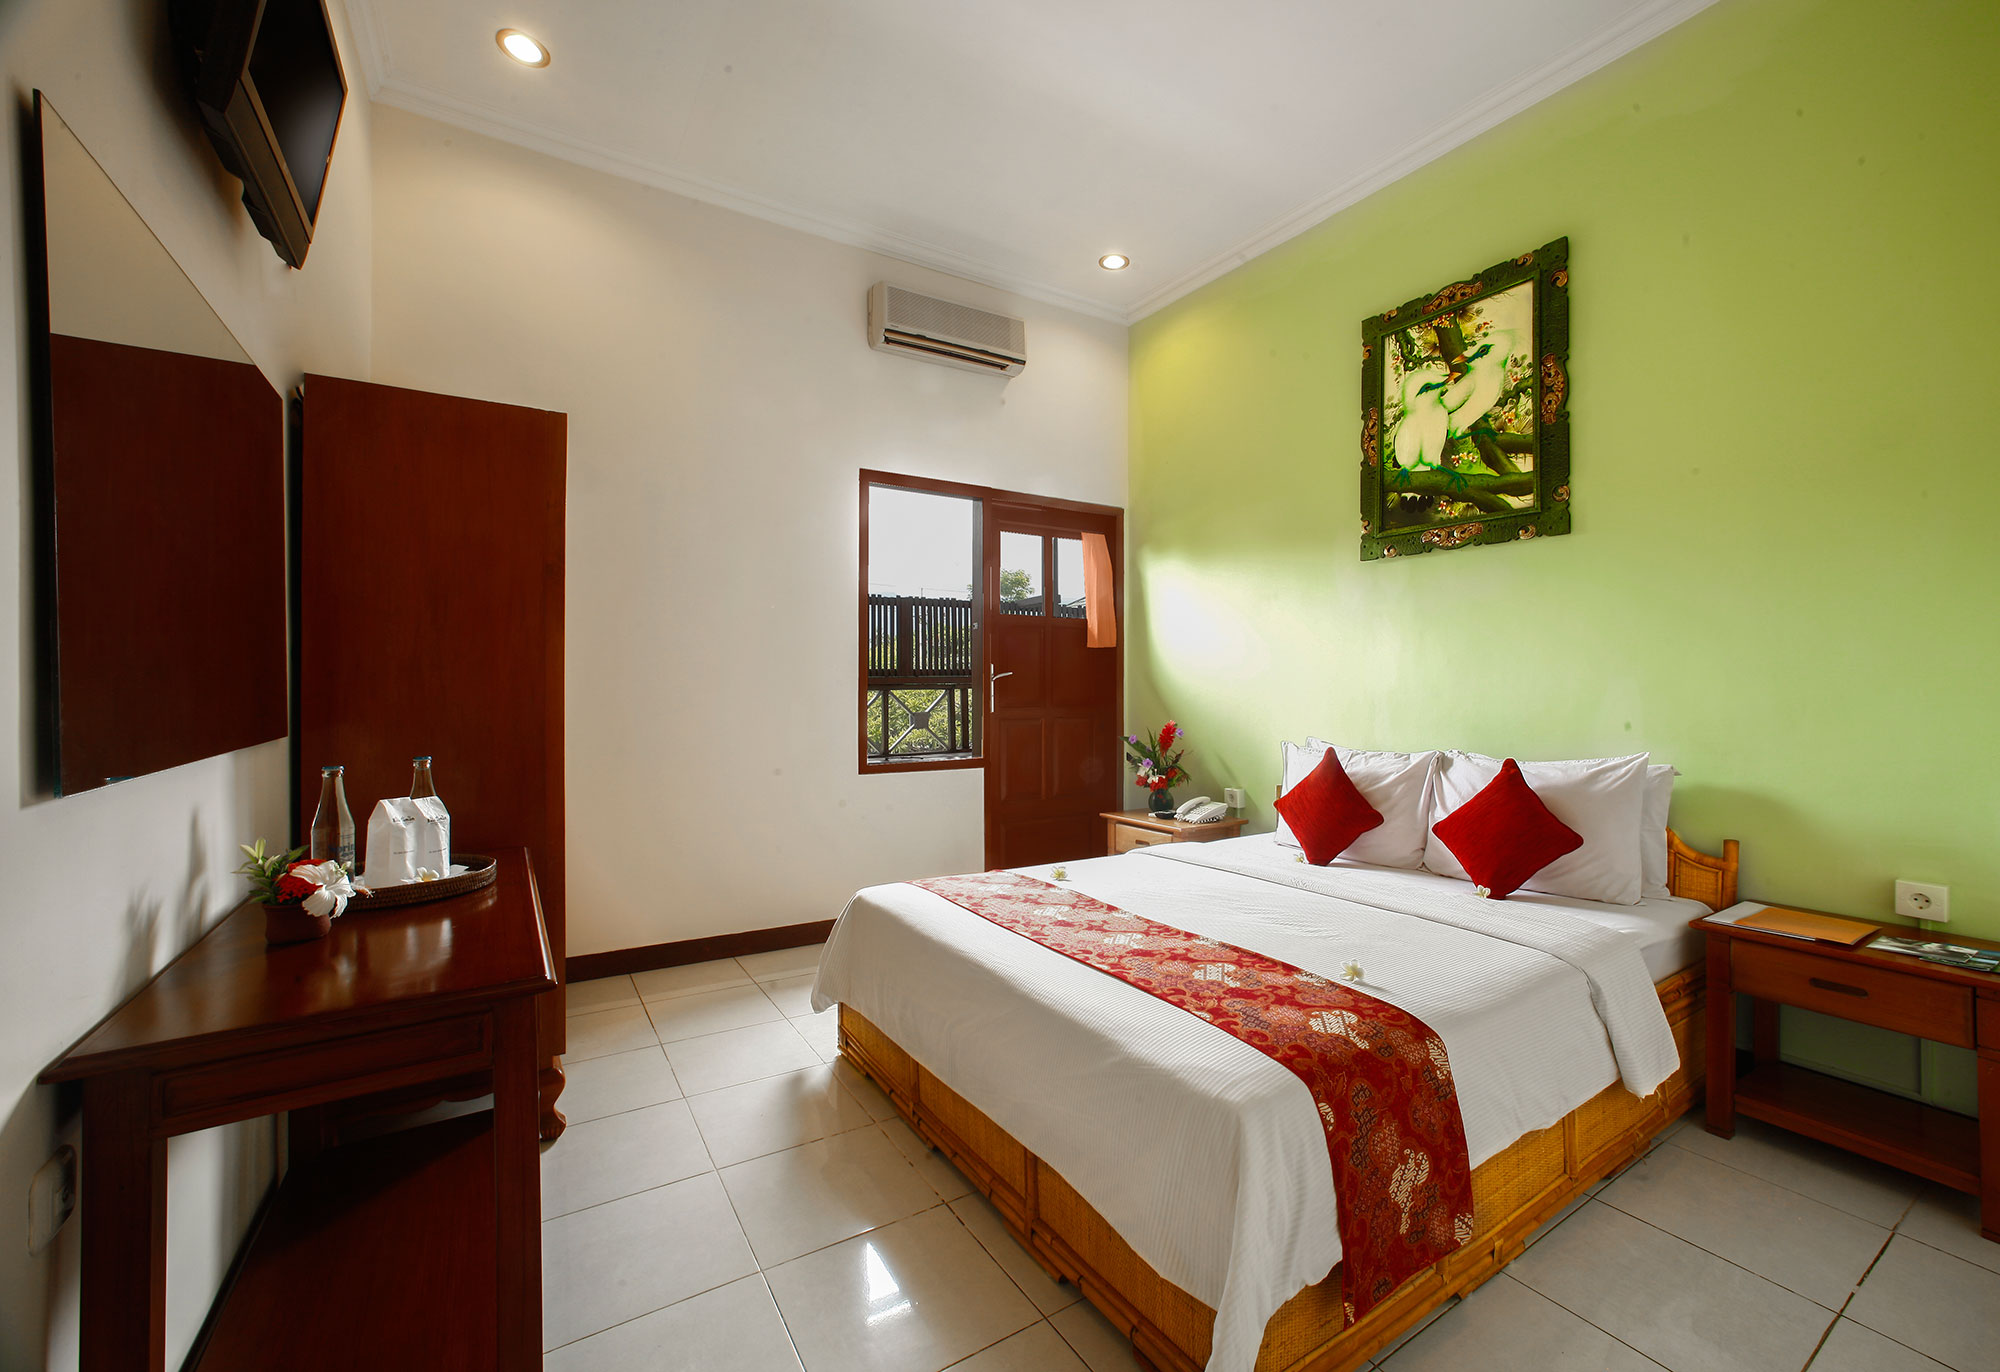 Superior Room - Bali Taman Resort Lovina